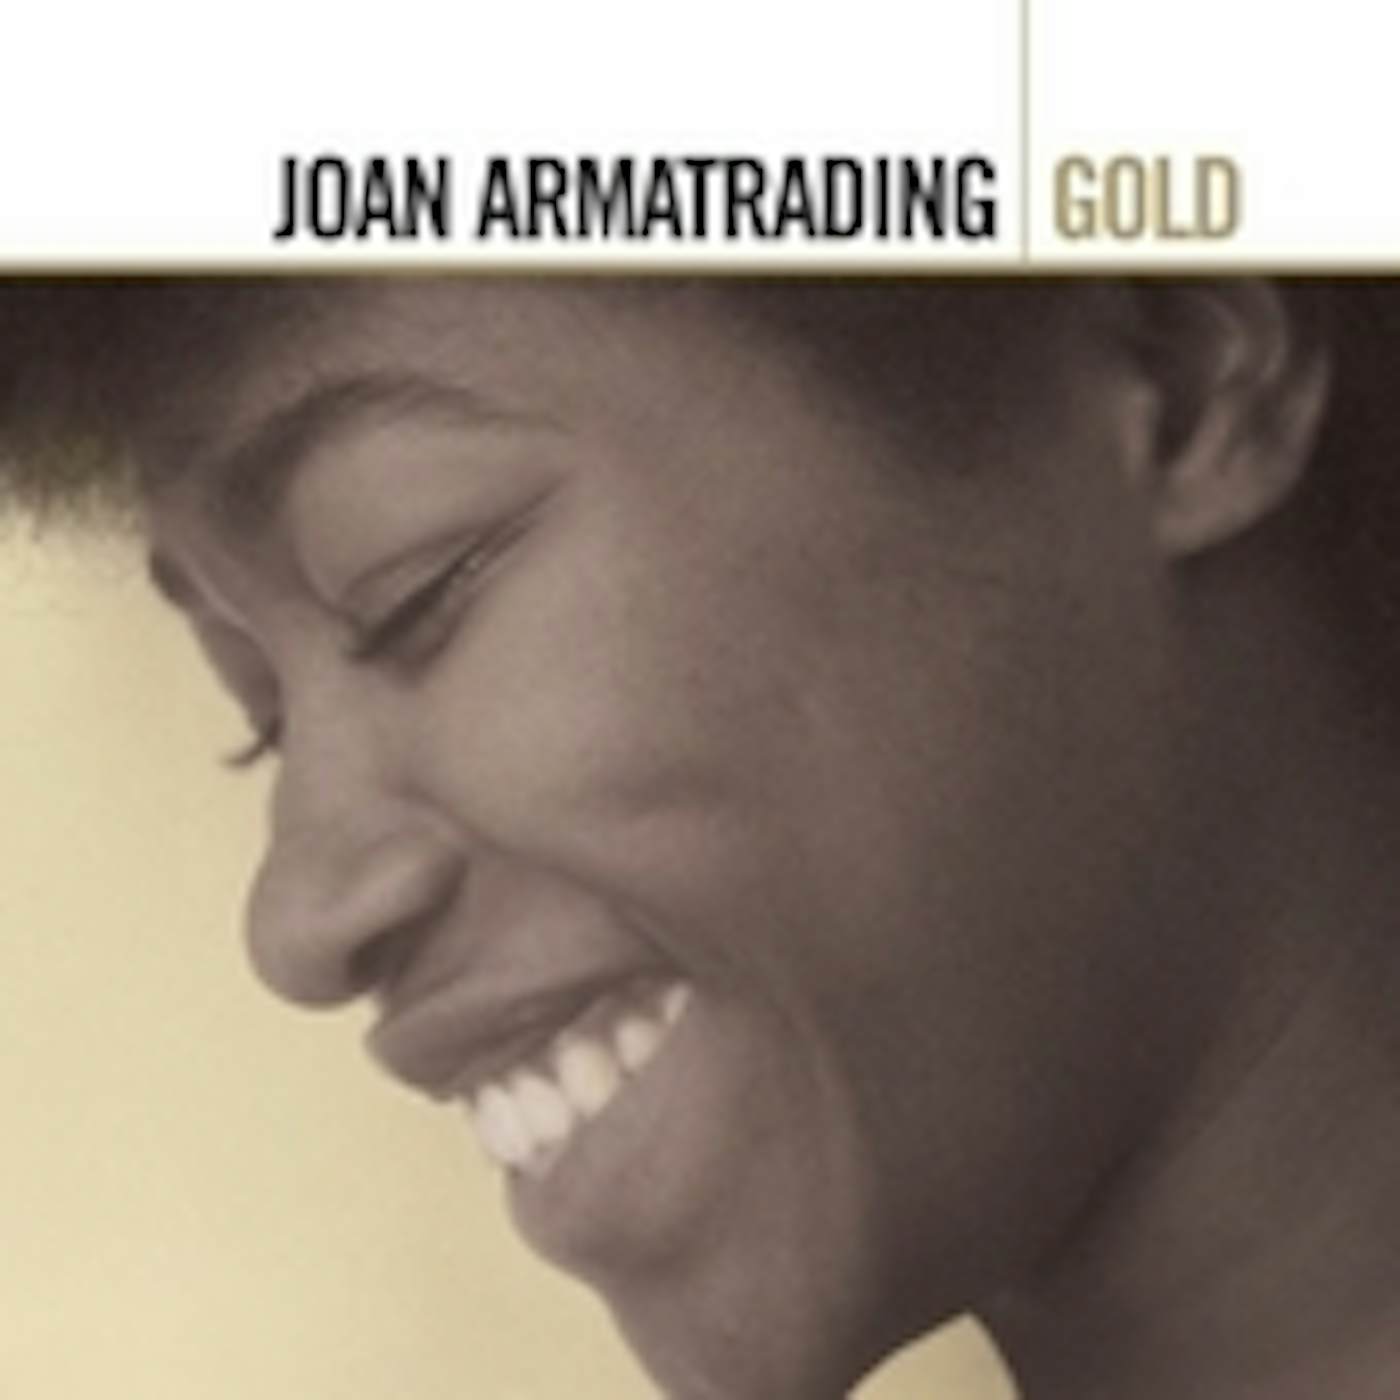 Joan Armatrading GOLD CD